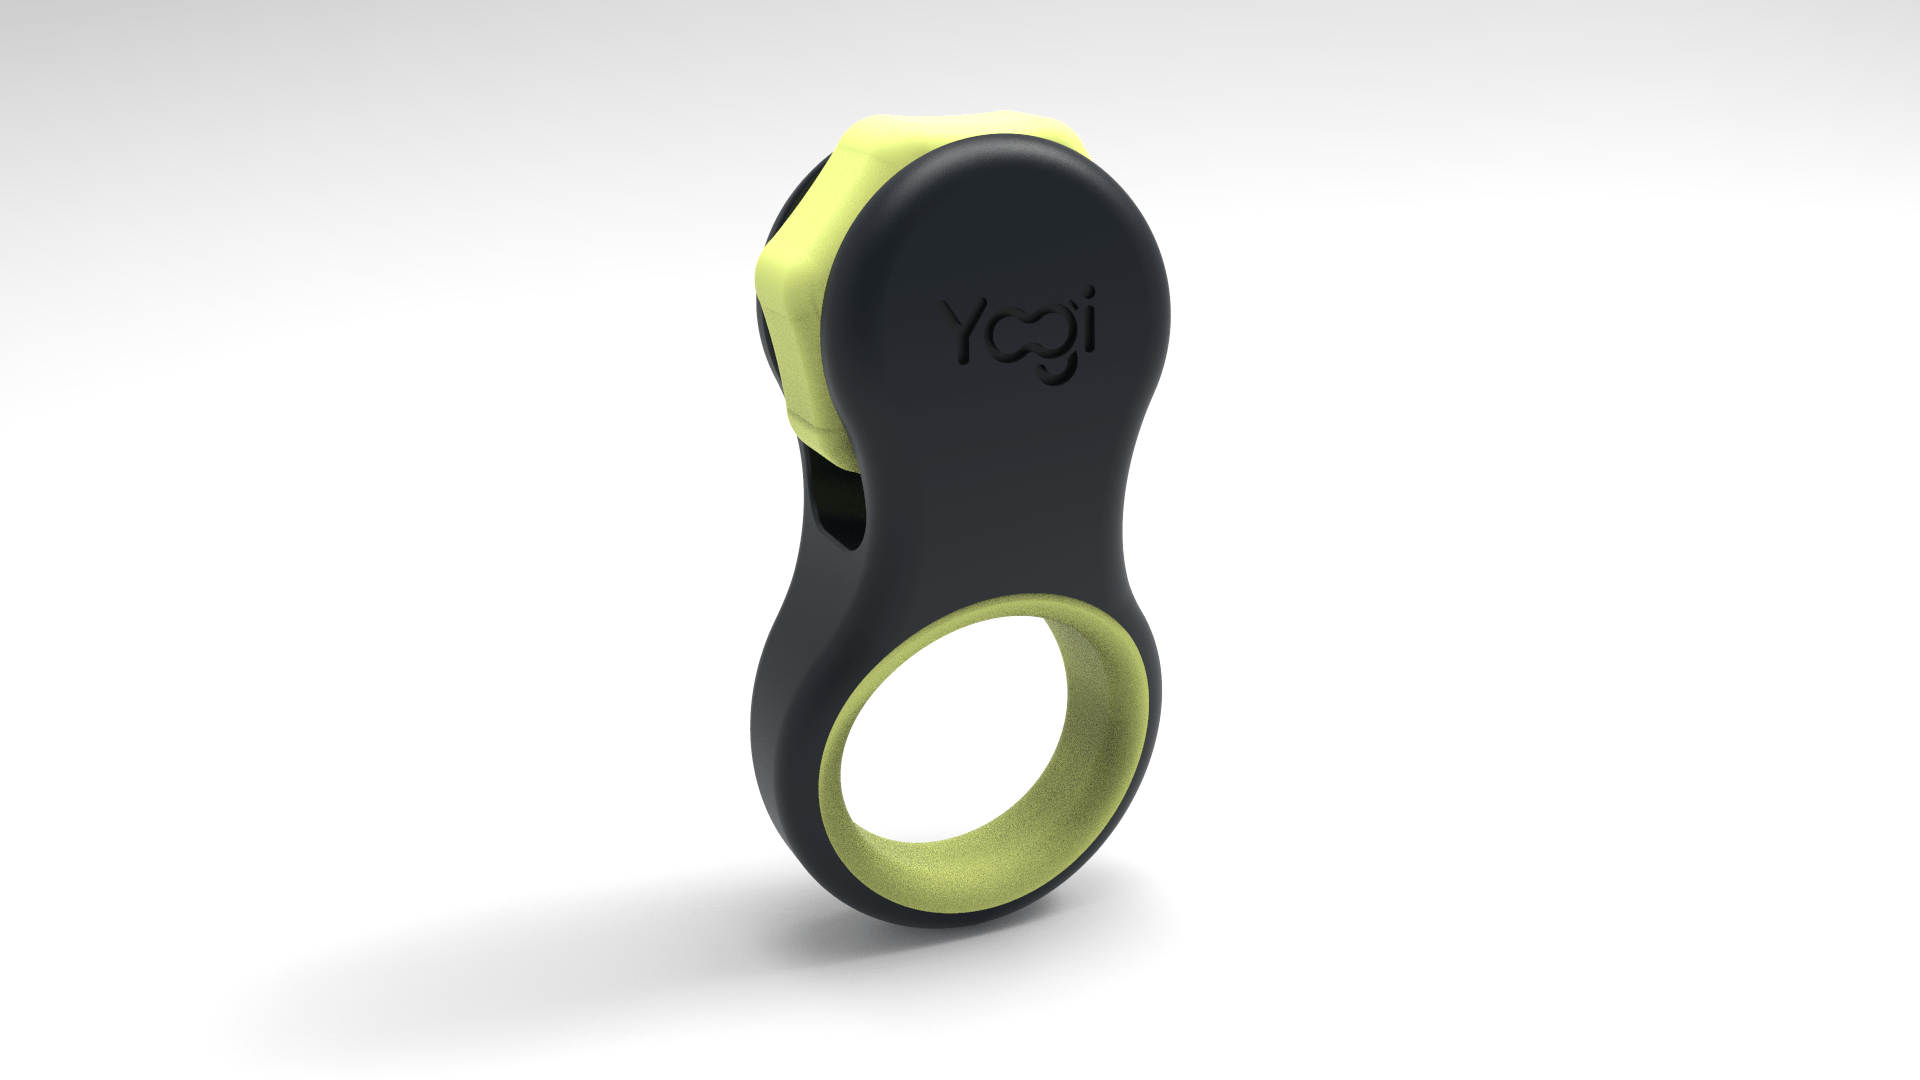 Yogi Fidget Toy - Finger Fidget Spinner Perfect for Kids and Adults, yogi Moonlight